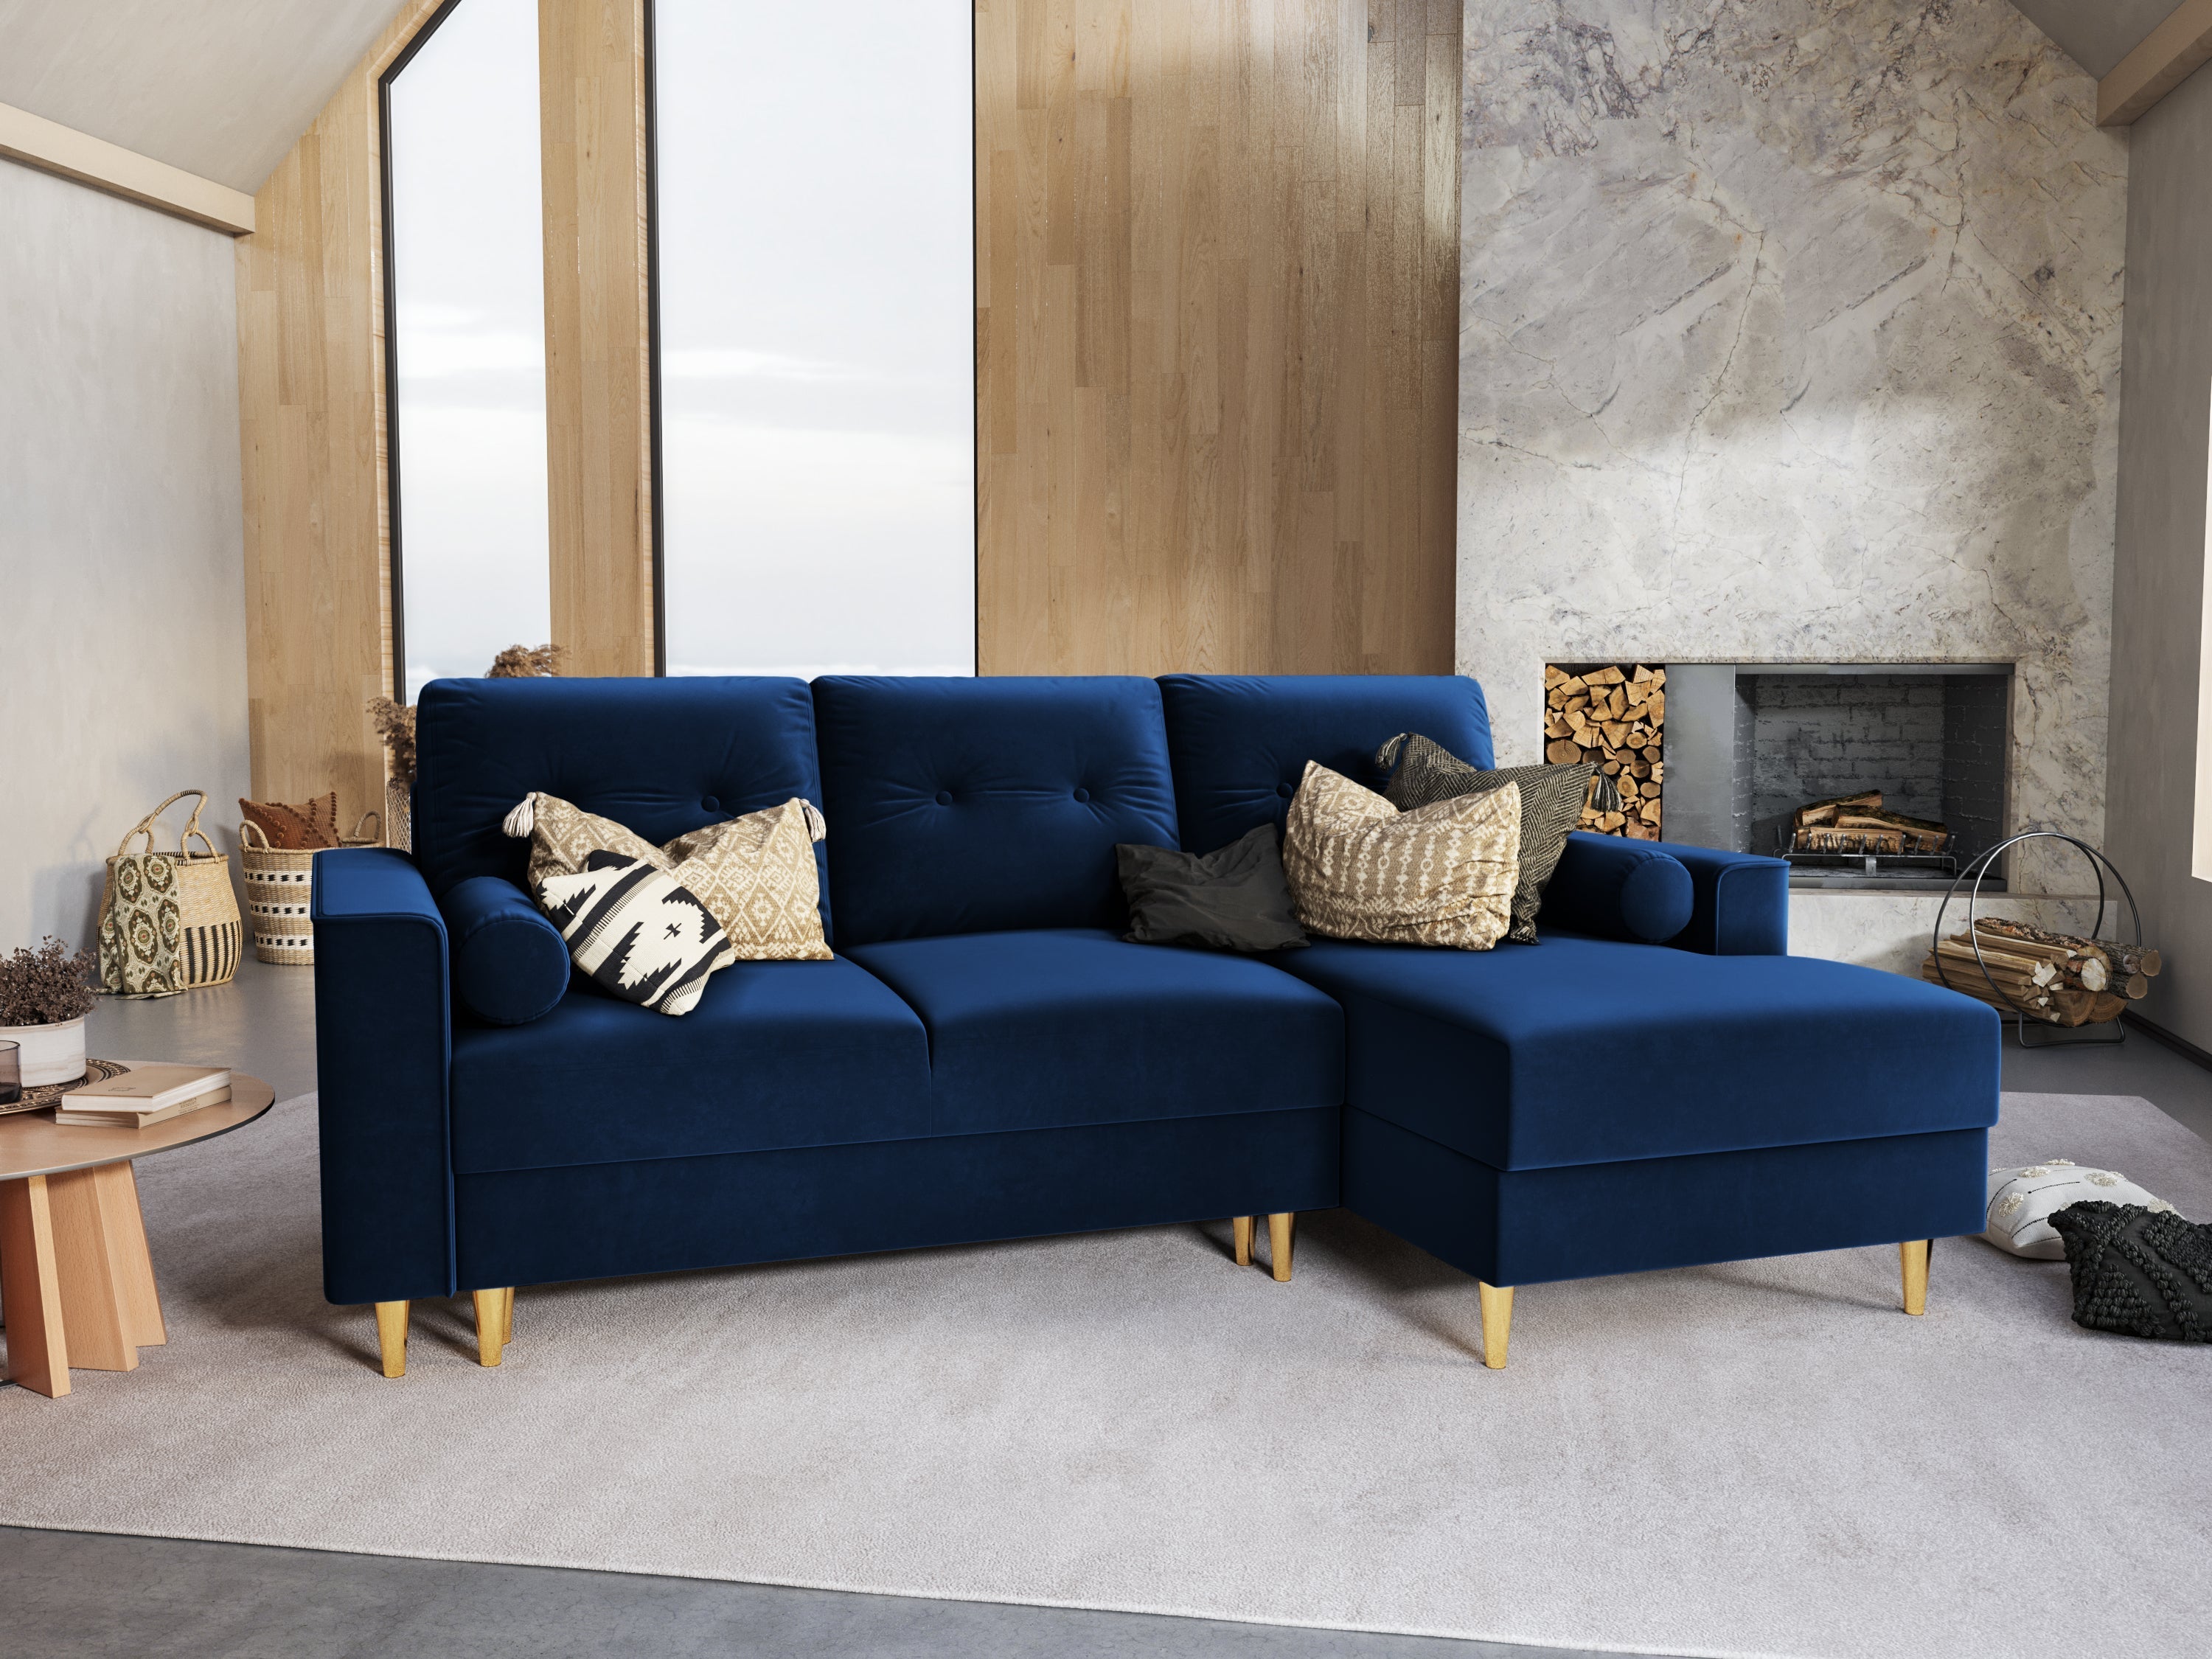 A corner for a modern living room